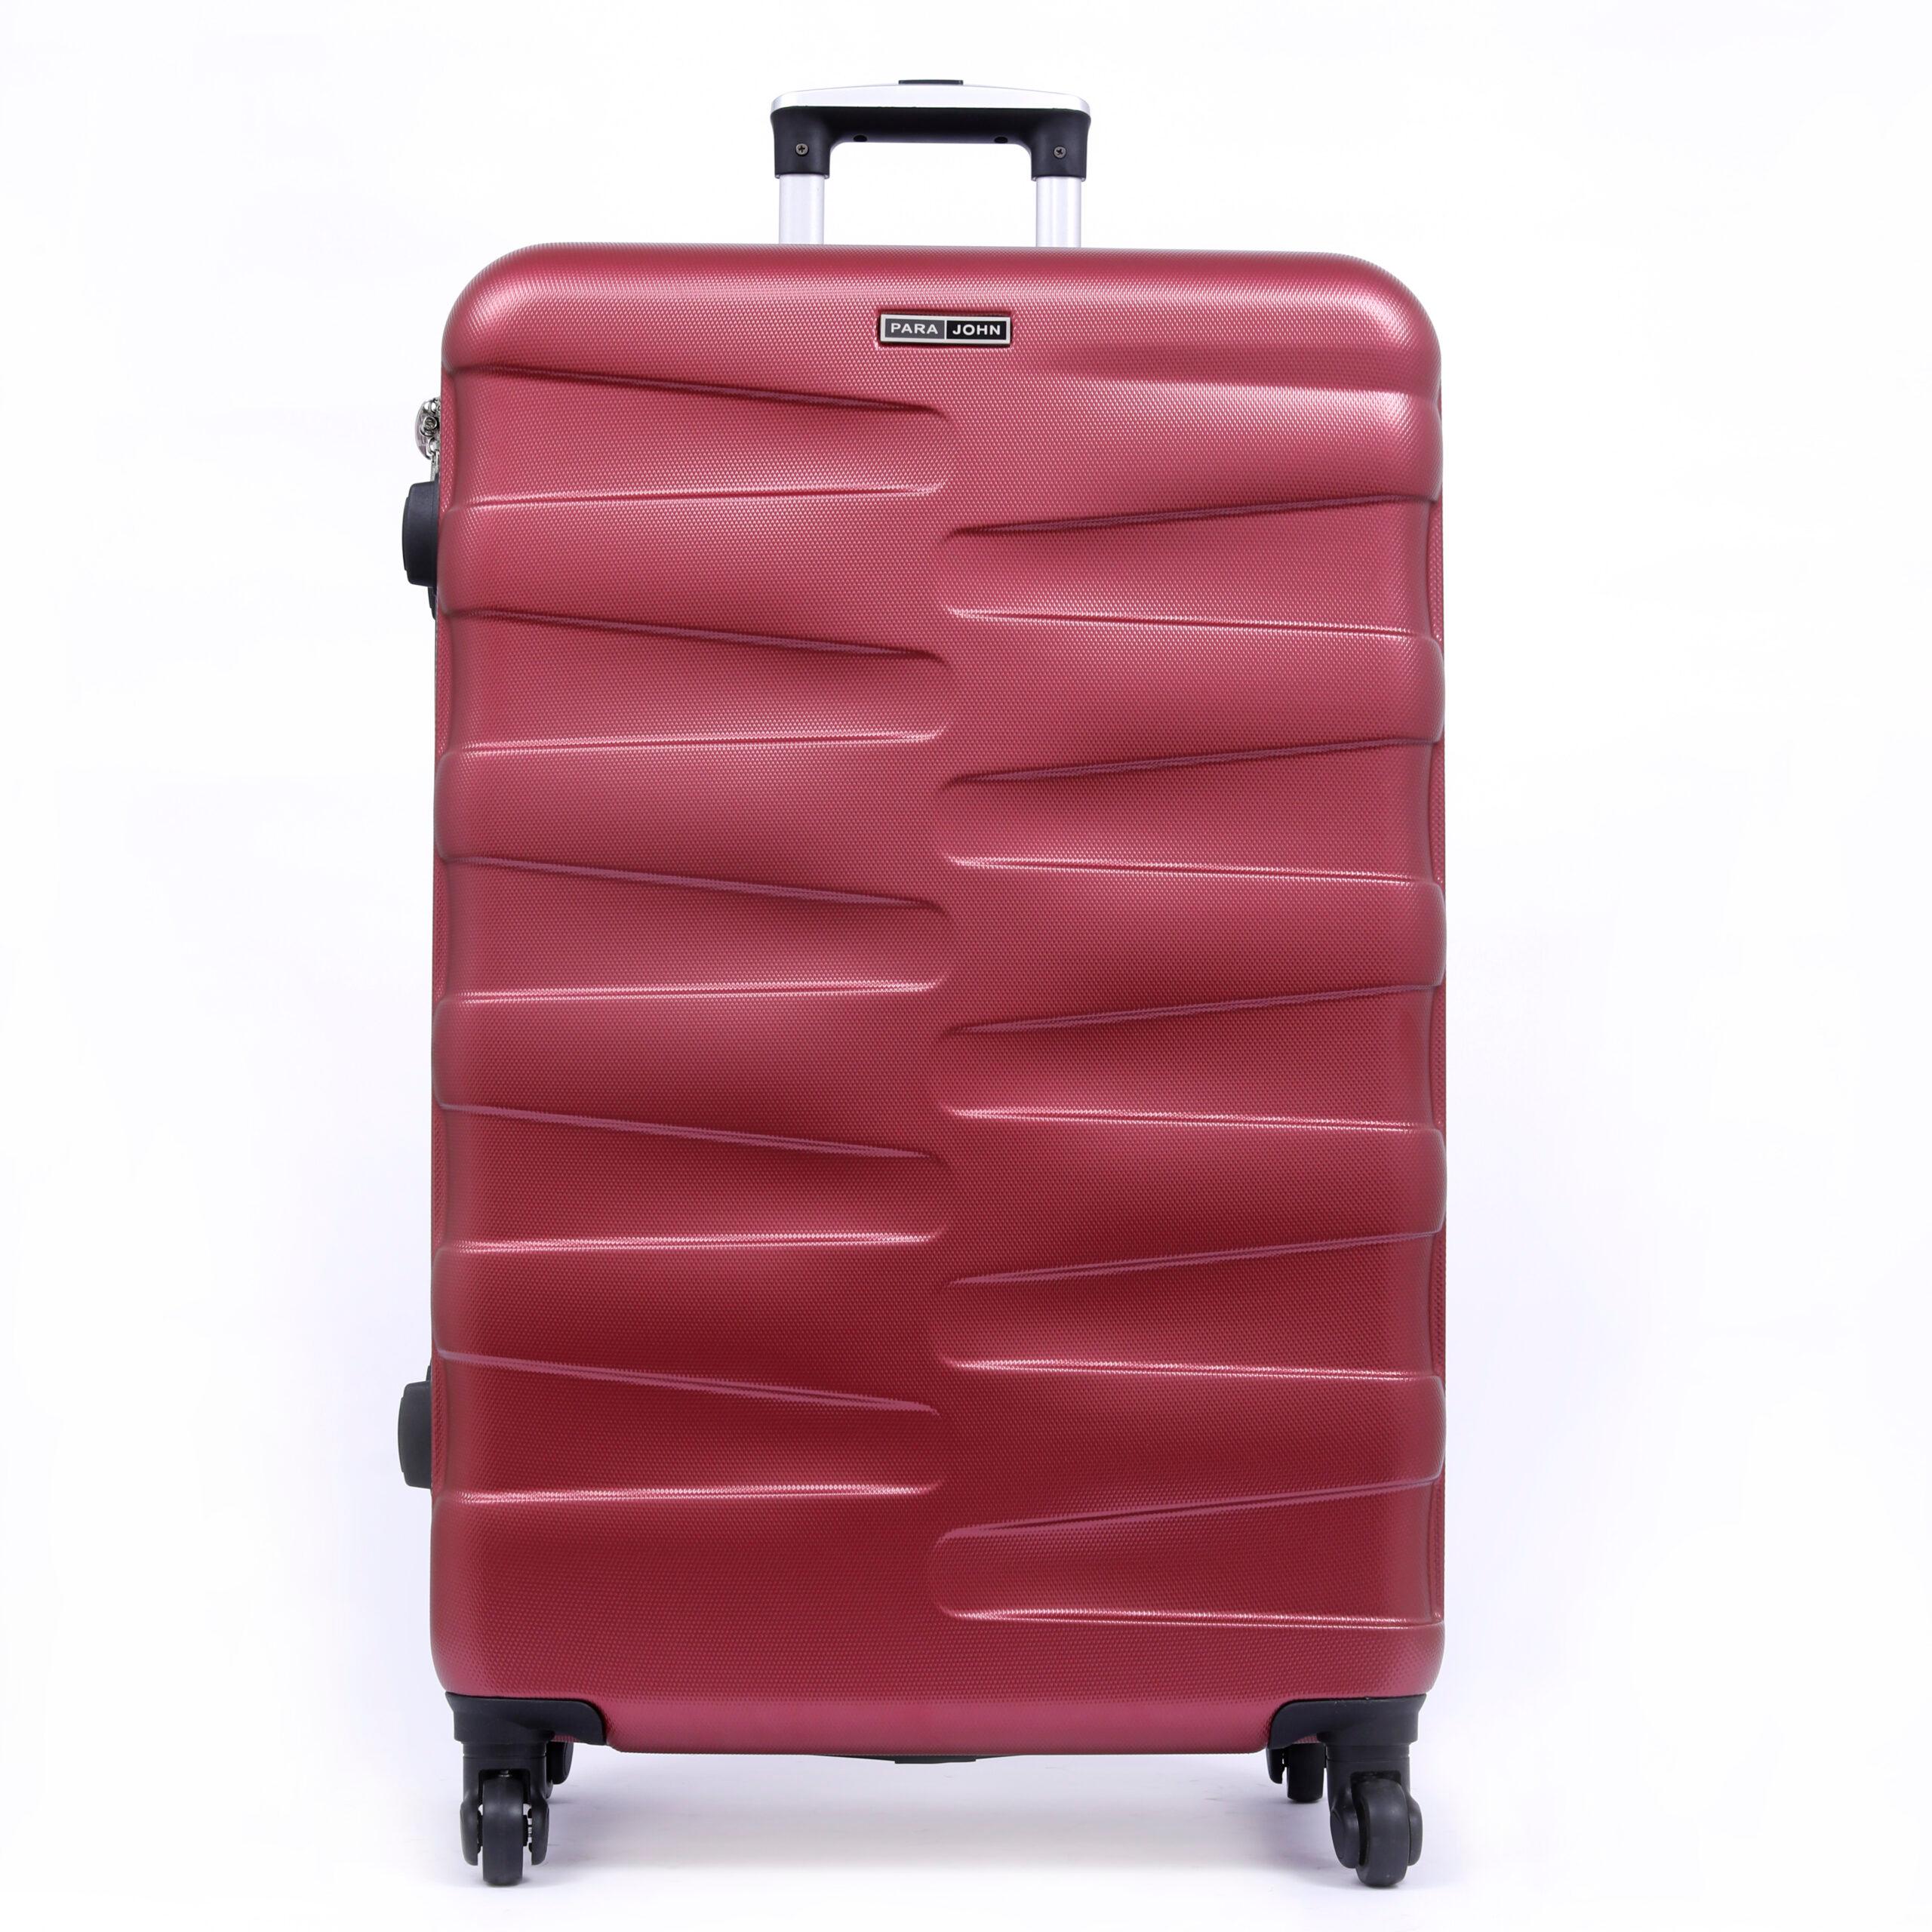 طقم حقائب سفر 3 حقائب مادة ABS بعجلات دوارة (20 ، 24 ، 28) بوصة أحمر PARA JOHN - Travel Luggage Suitcase Set of 3 -  Trolley Bag, Carry On Hand Cabin Luggage Bag (20 ، 24 ، 28) inch - cG9zdDo0MzgwODM=